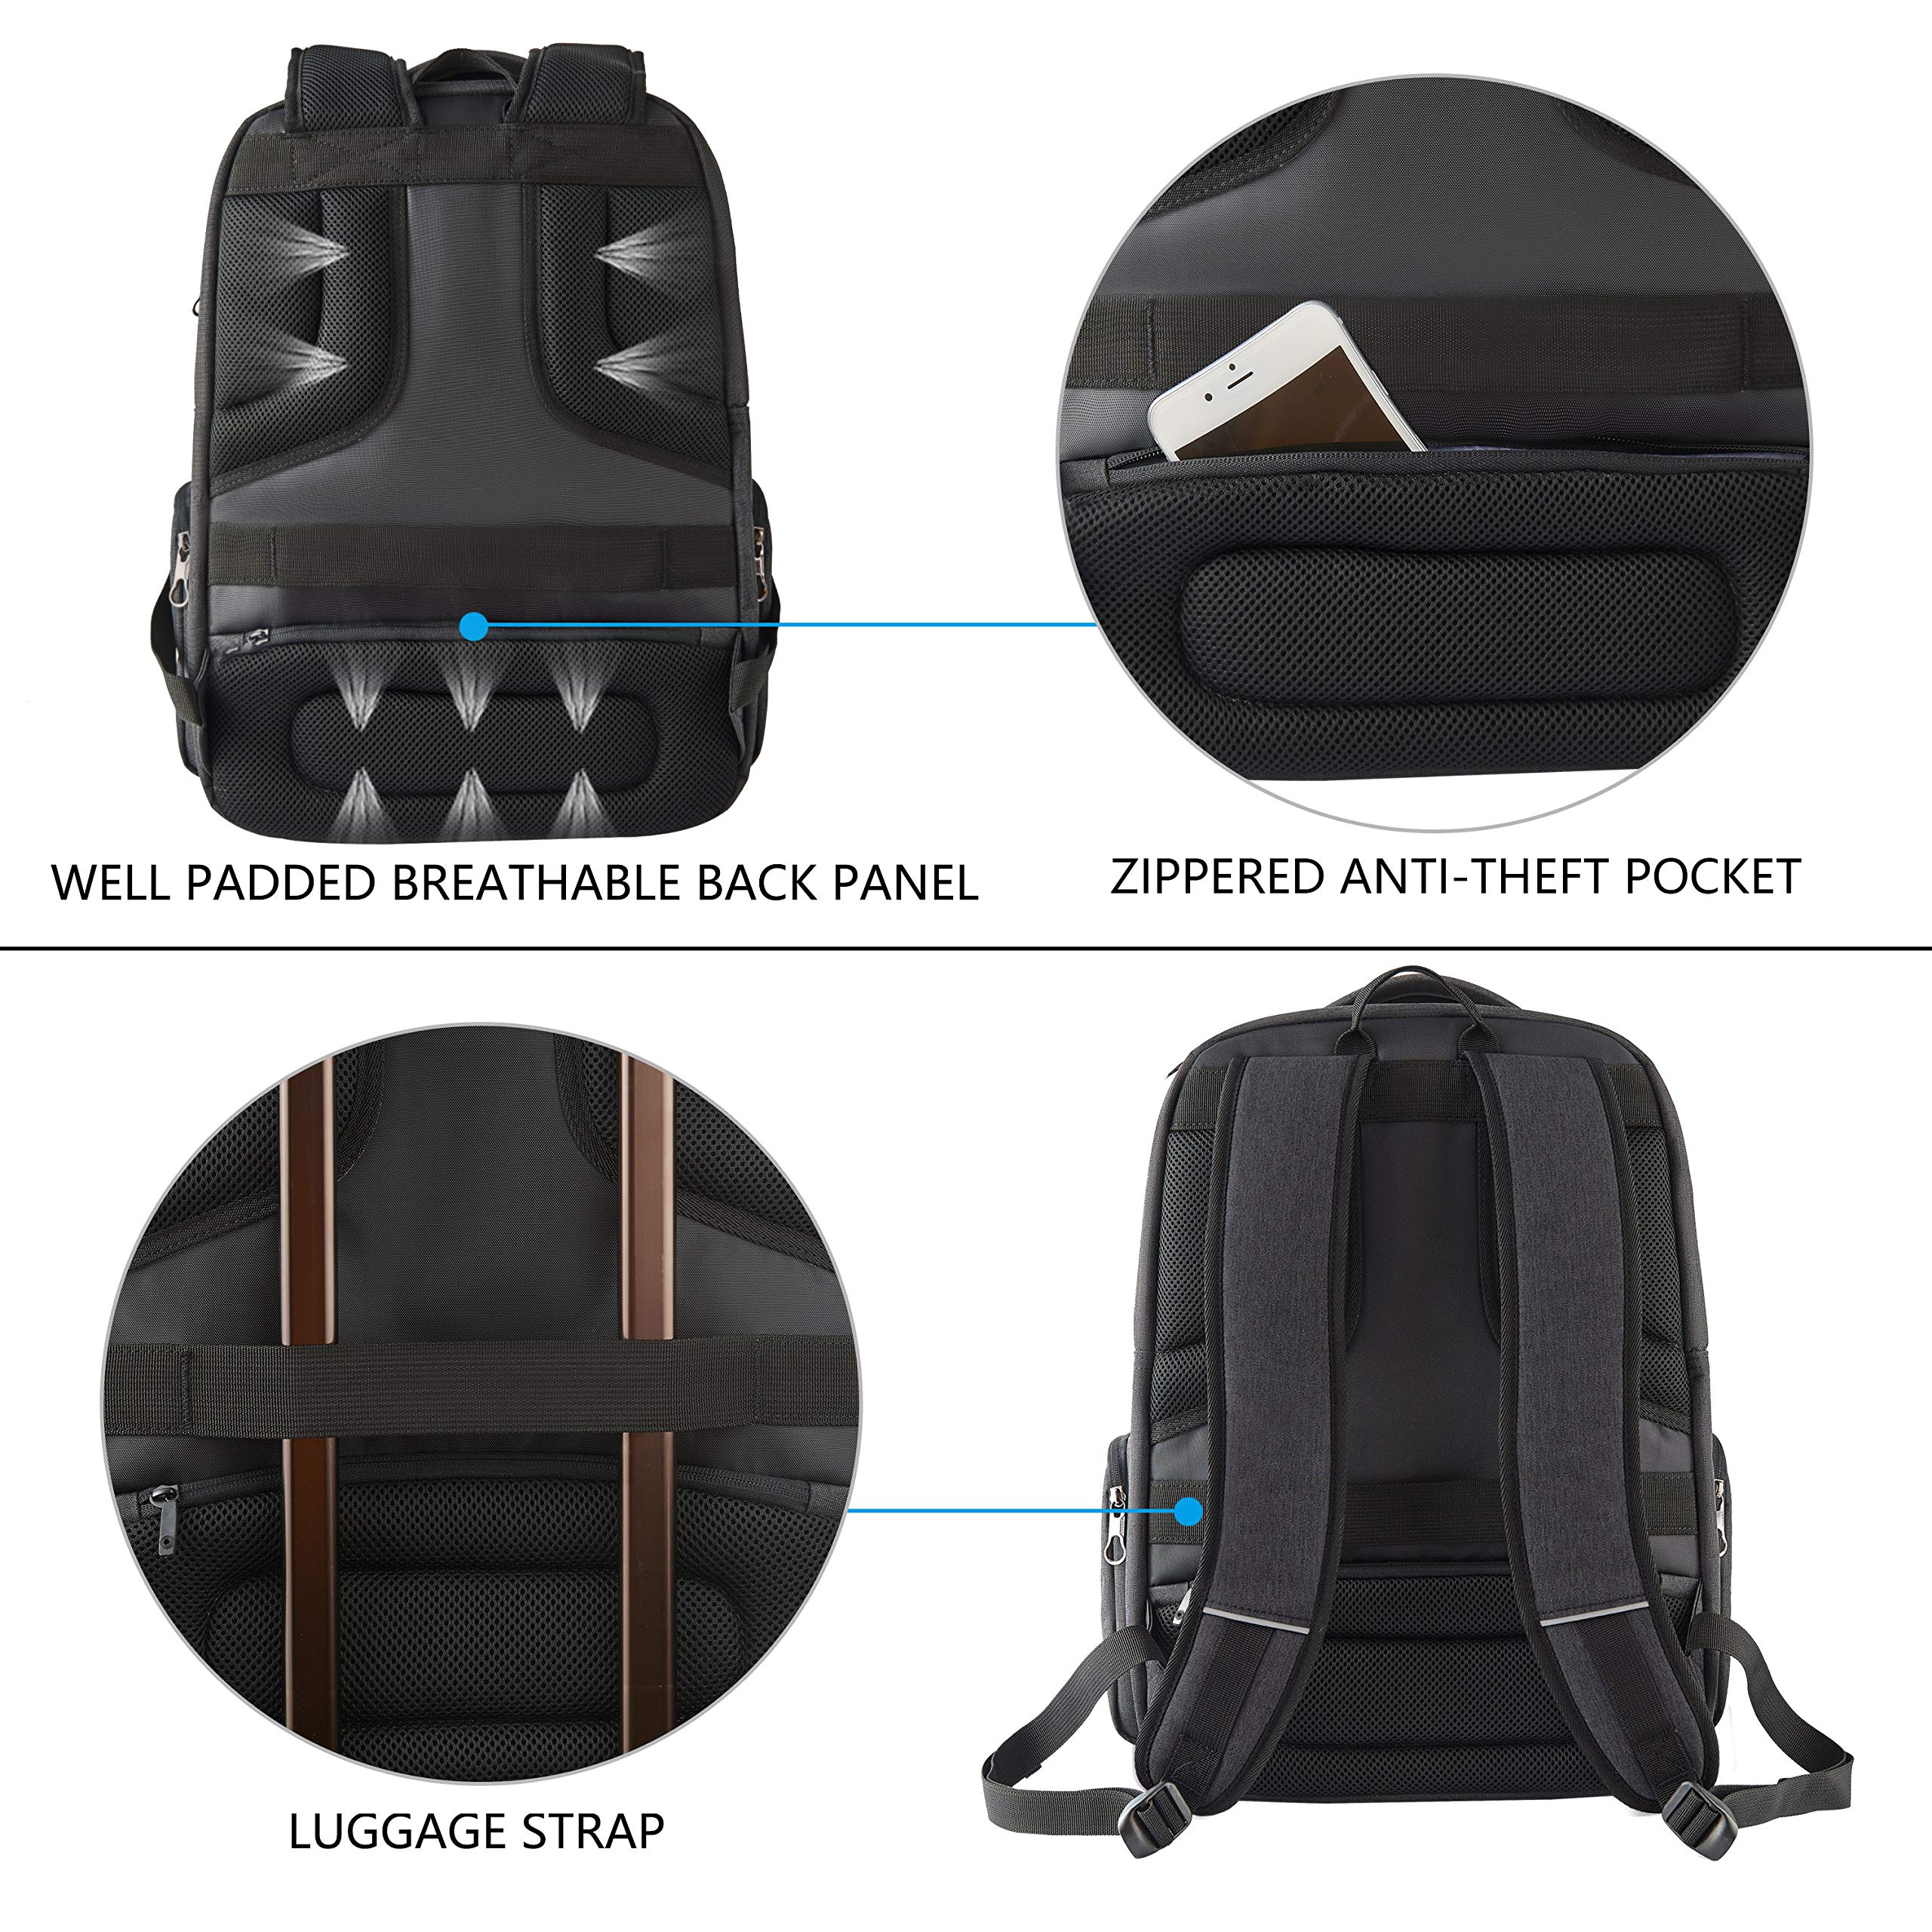 RFID-Blocking Travel Laptop Backpack - yrGear Australia